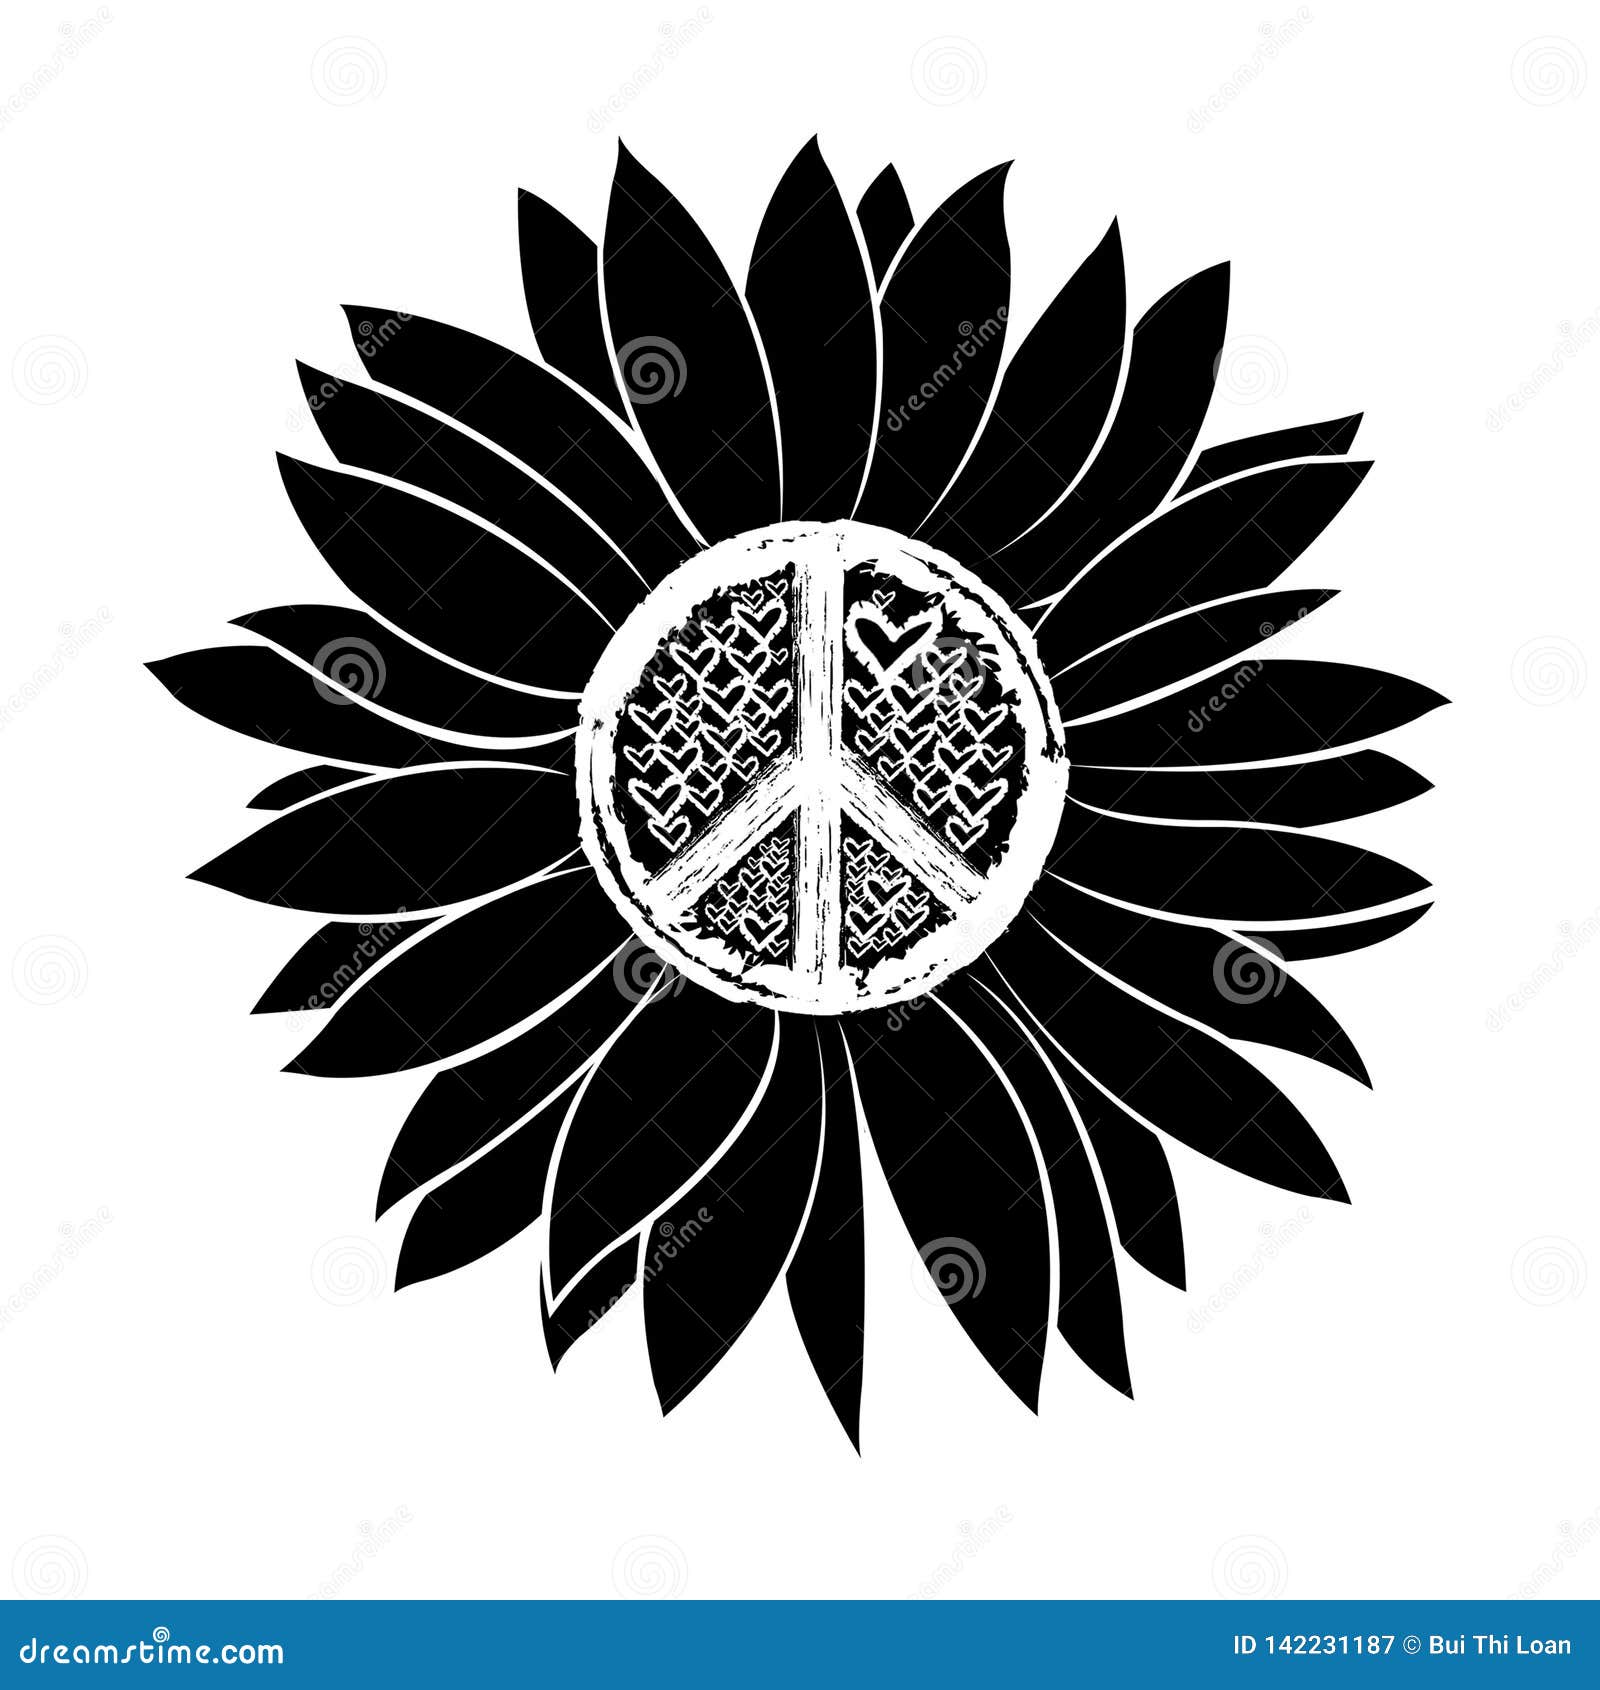 Sunflower peace sign stock vector. Illustration of shape - 142231187